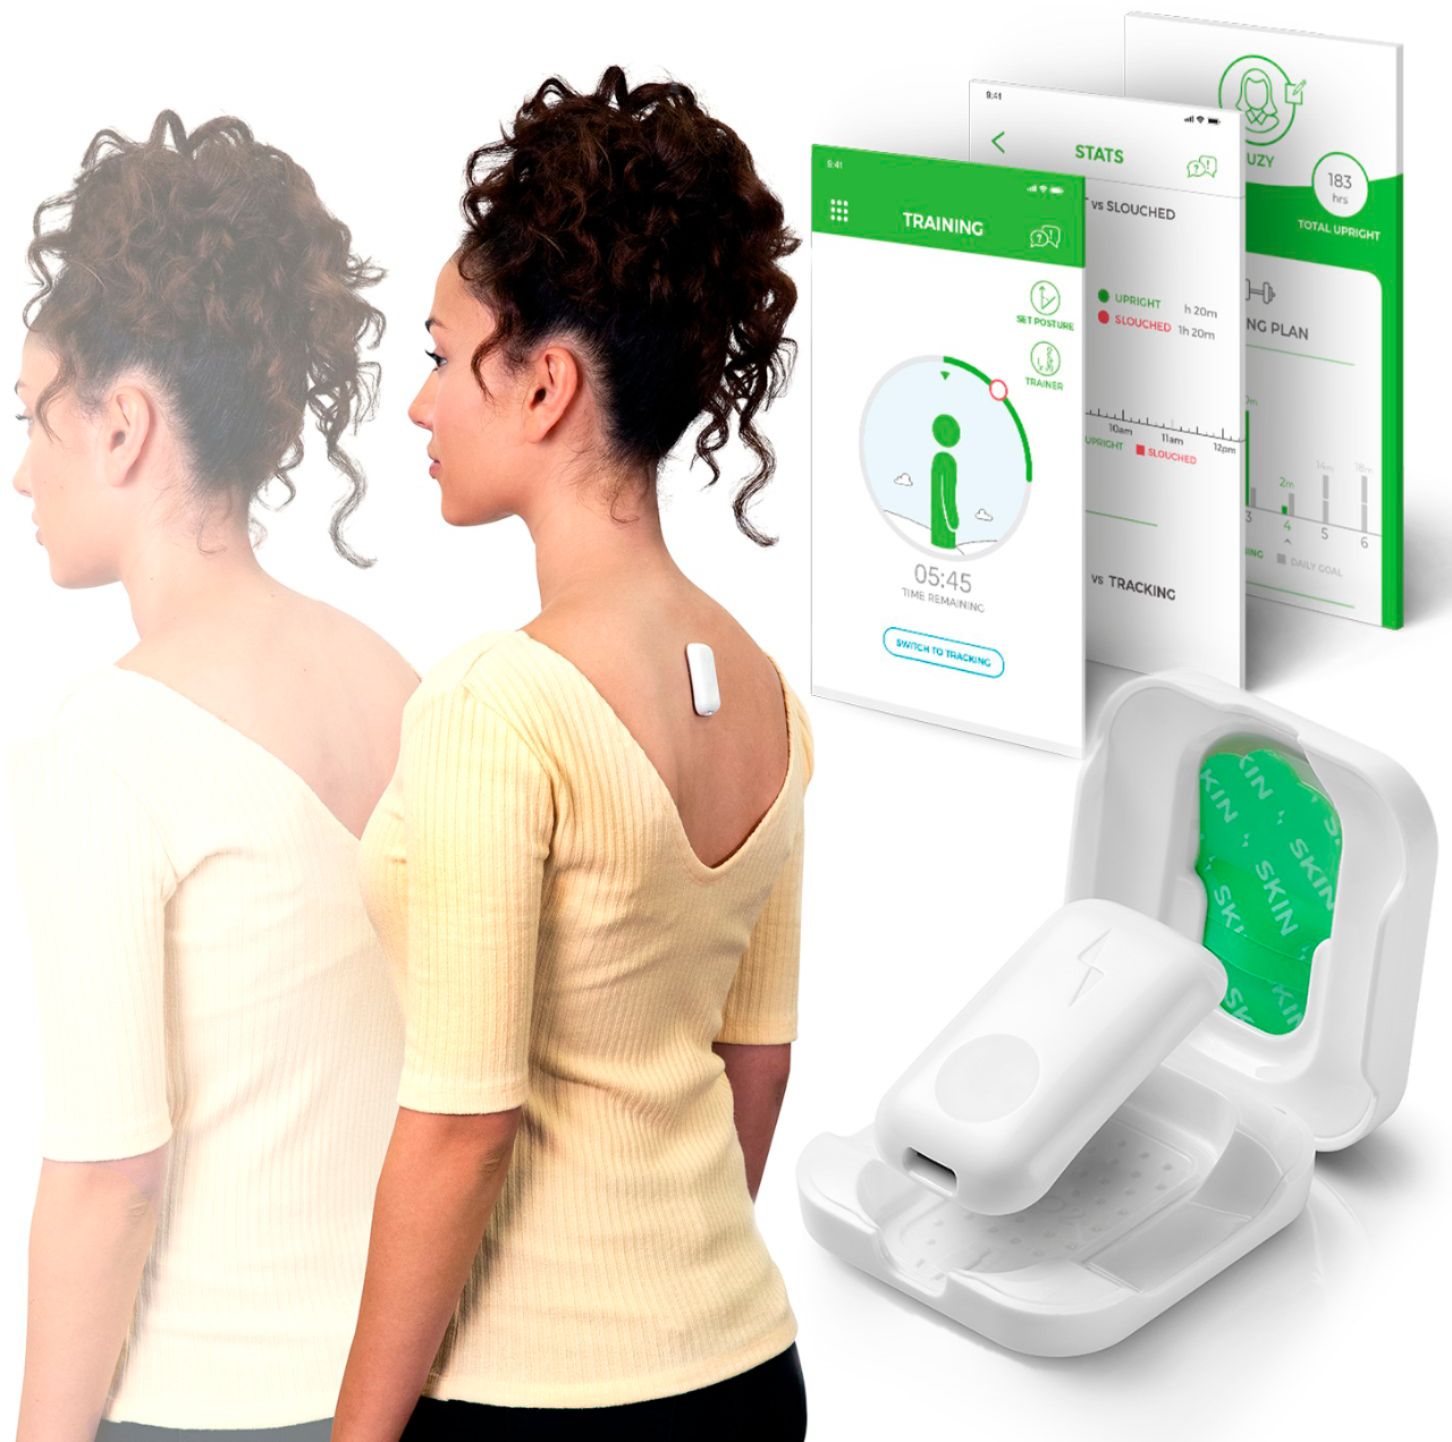 Upright Go 2 smart posture improver review